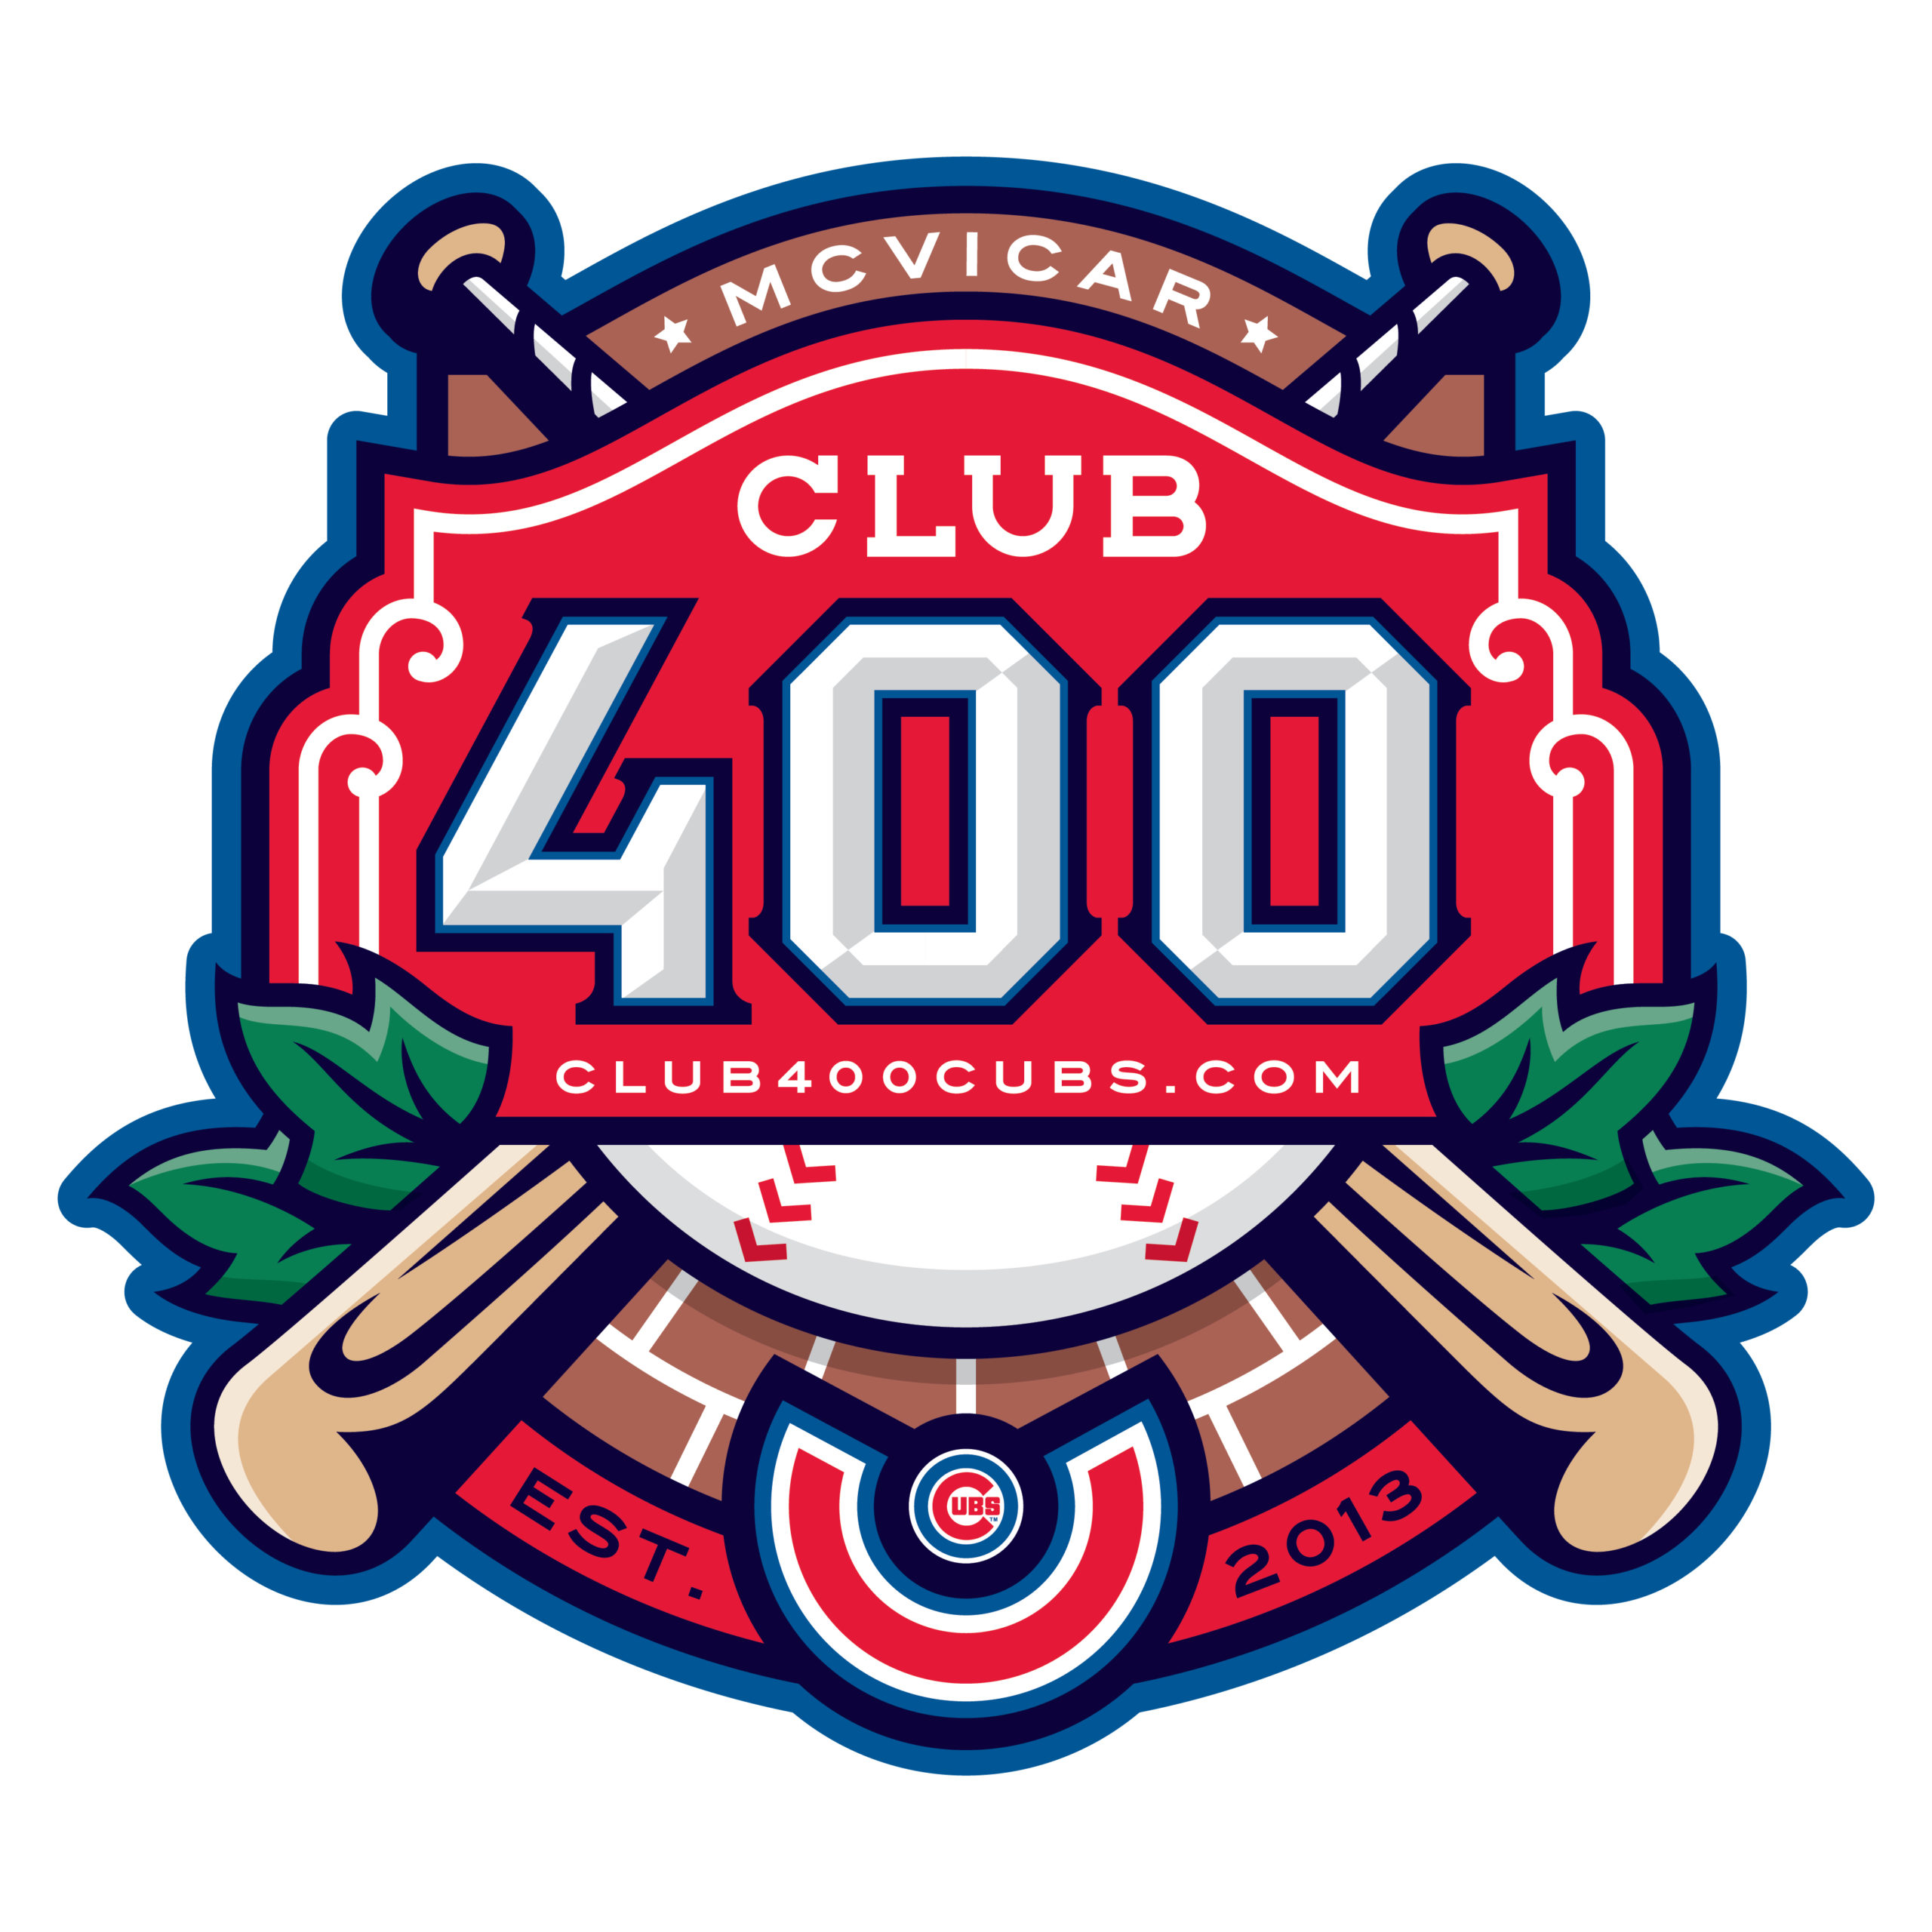 Club 400